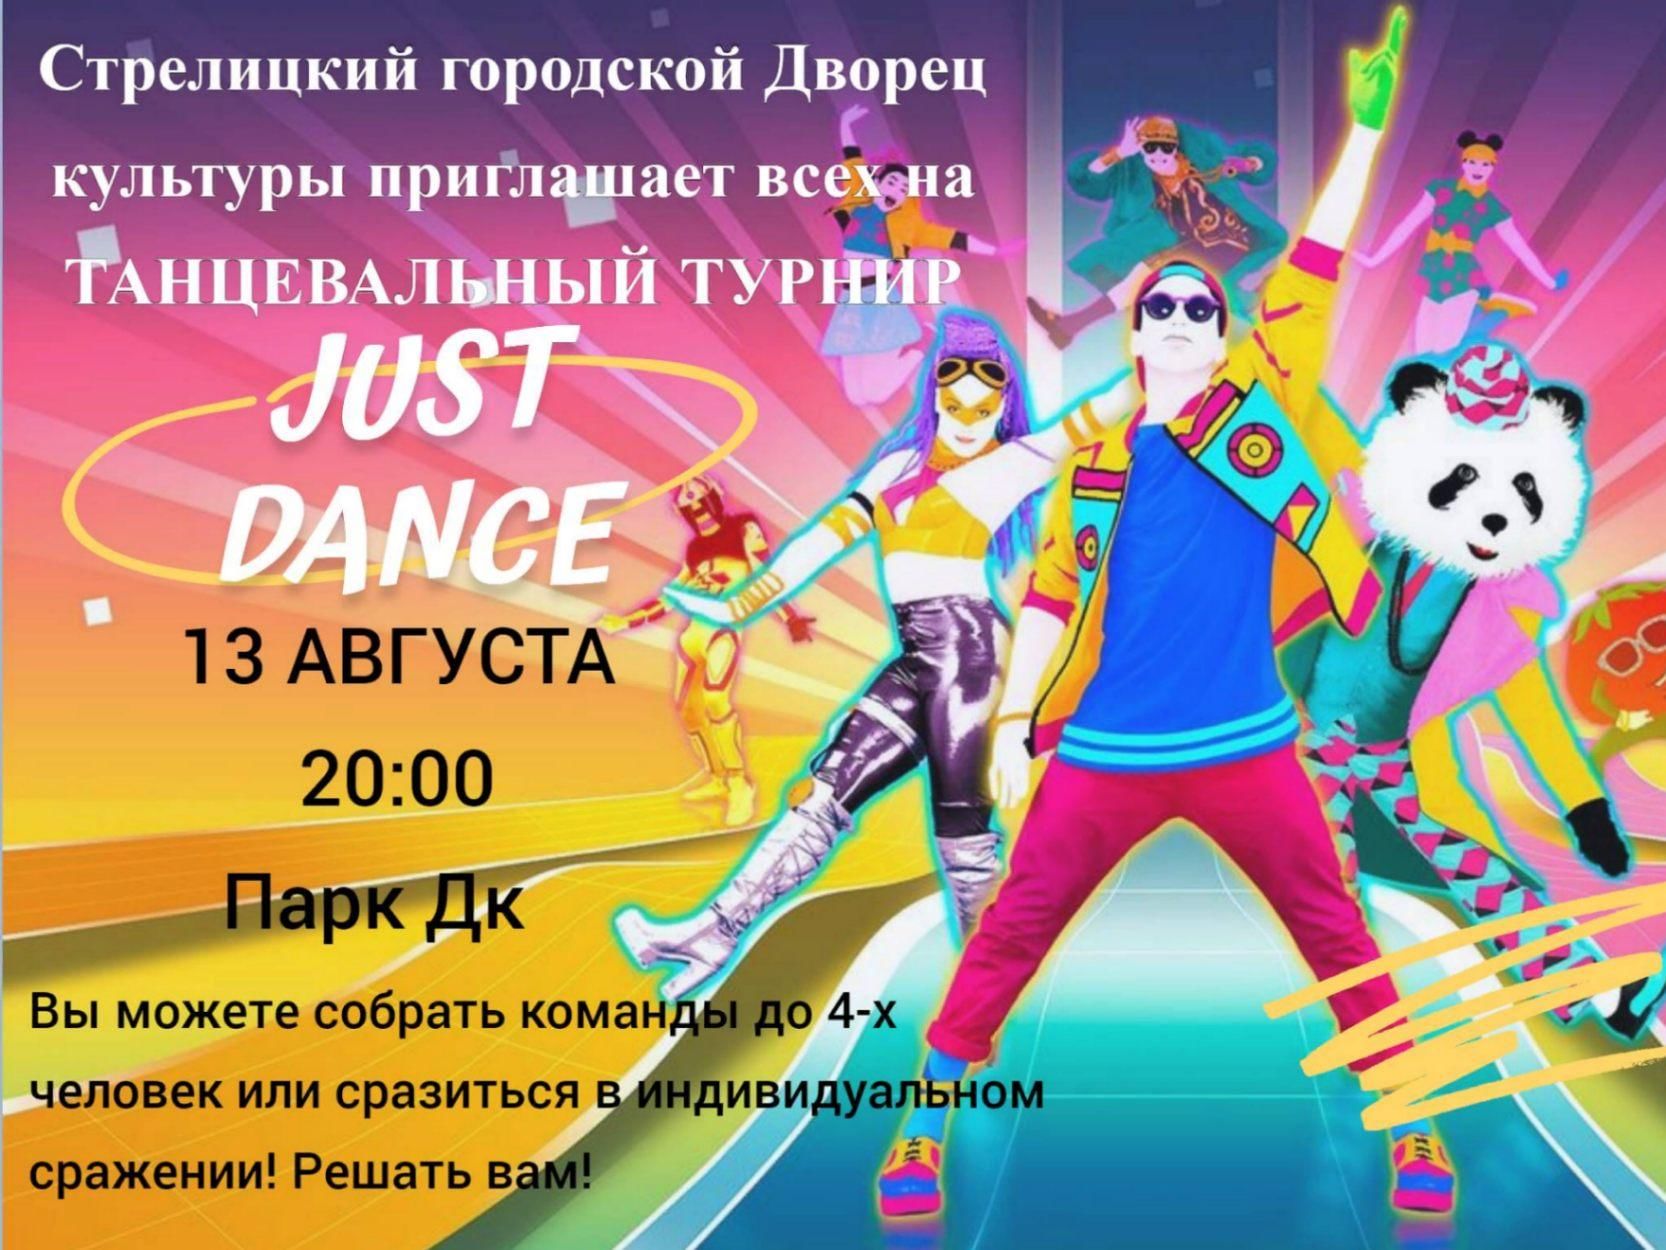 Календарь соревнований по танцам. Just Dance турнир. Афиша турнира танцы. Джаст дэнс танцы мероприятии. Just Dance 2022.